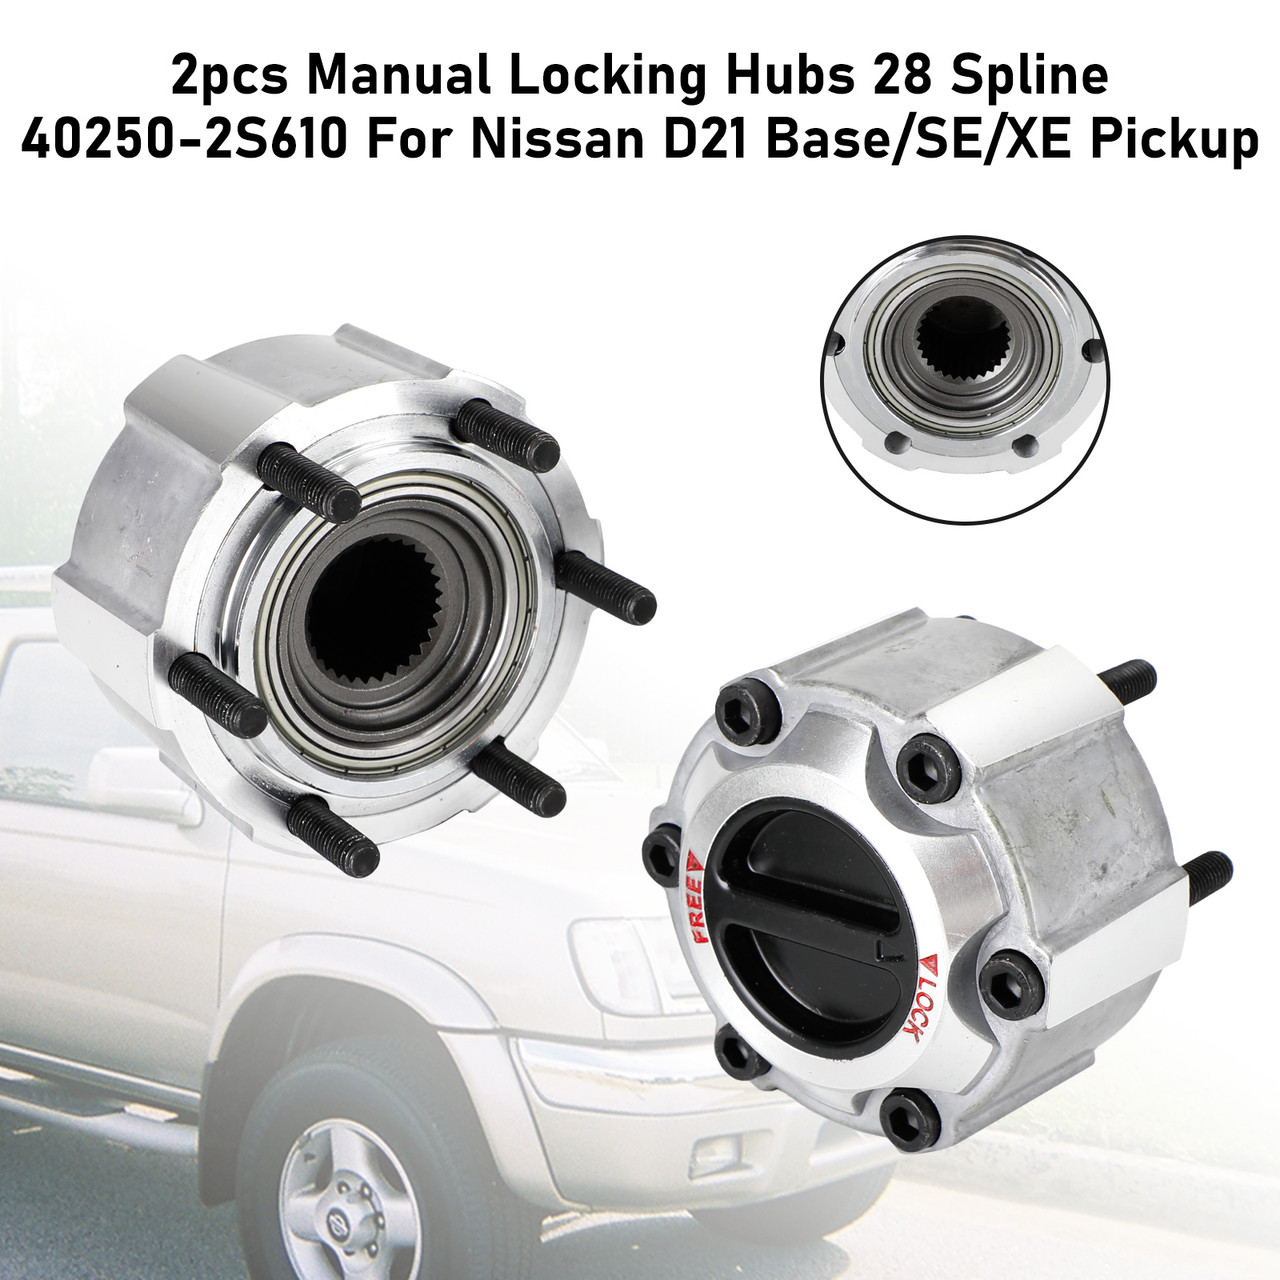 2pcs Manual Locking Hubs 28 Spline 40250-2S610 Nissan D21 Base/SE/XE Pickup